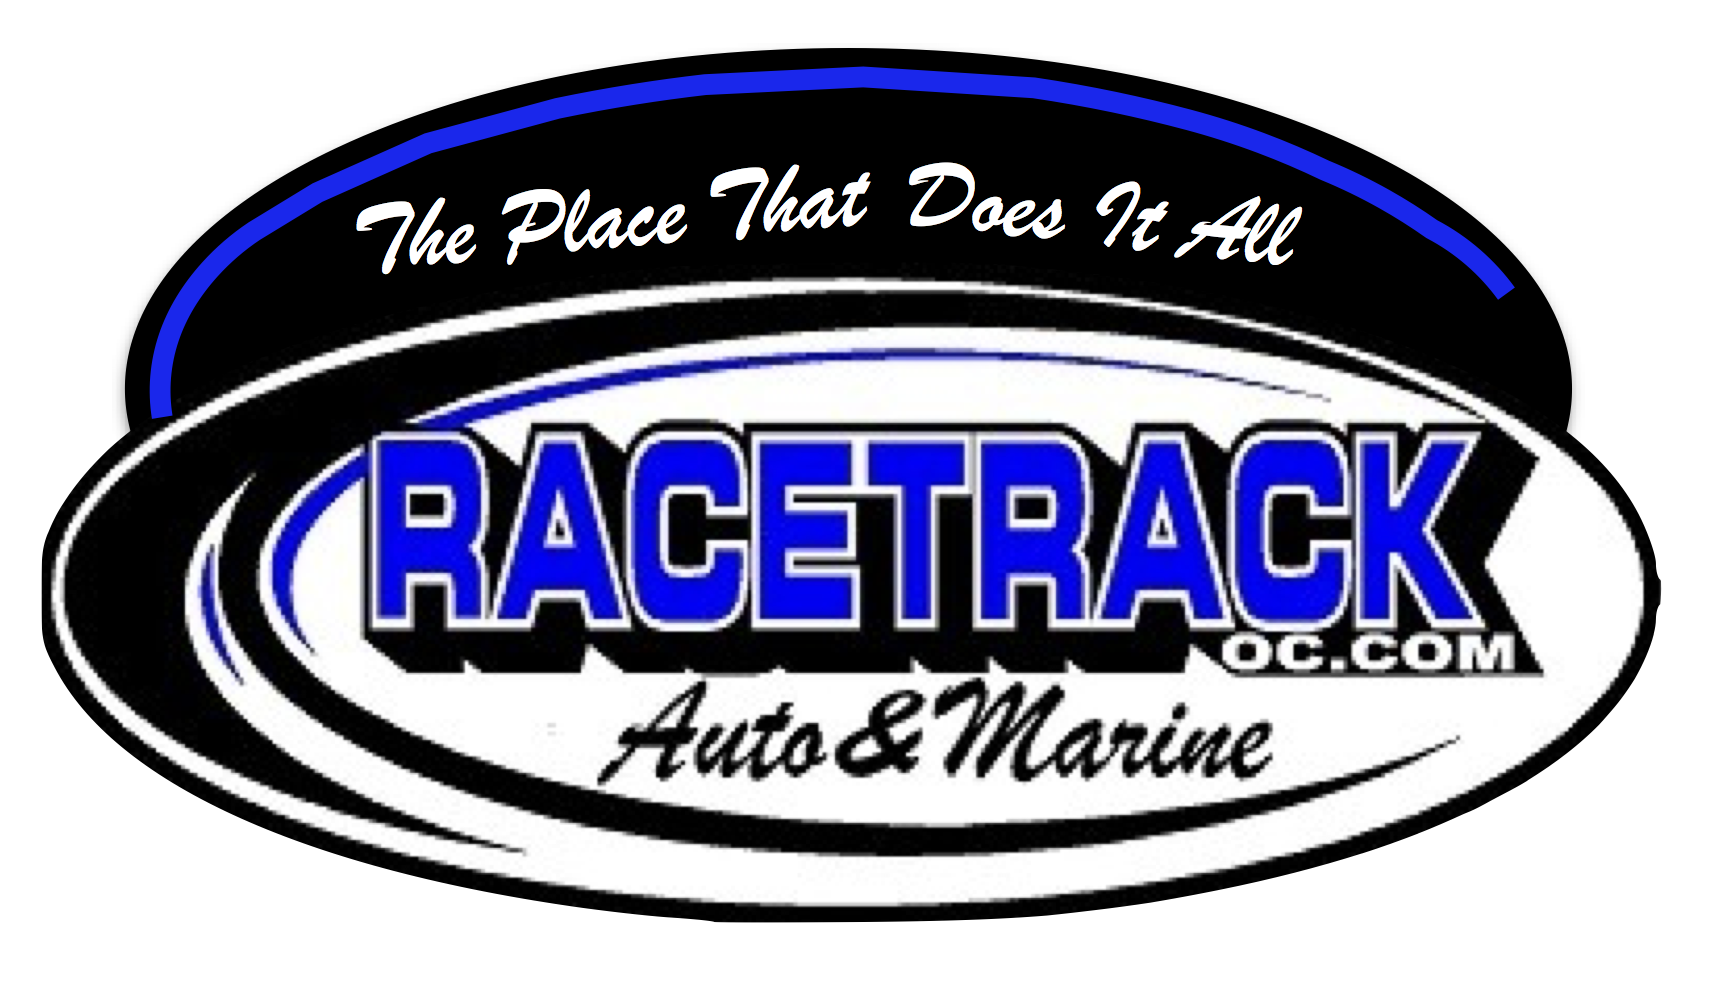 Racetrack Marine